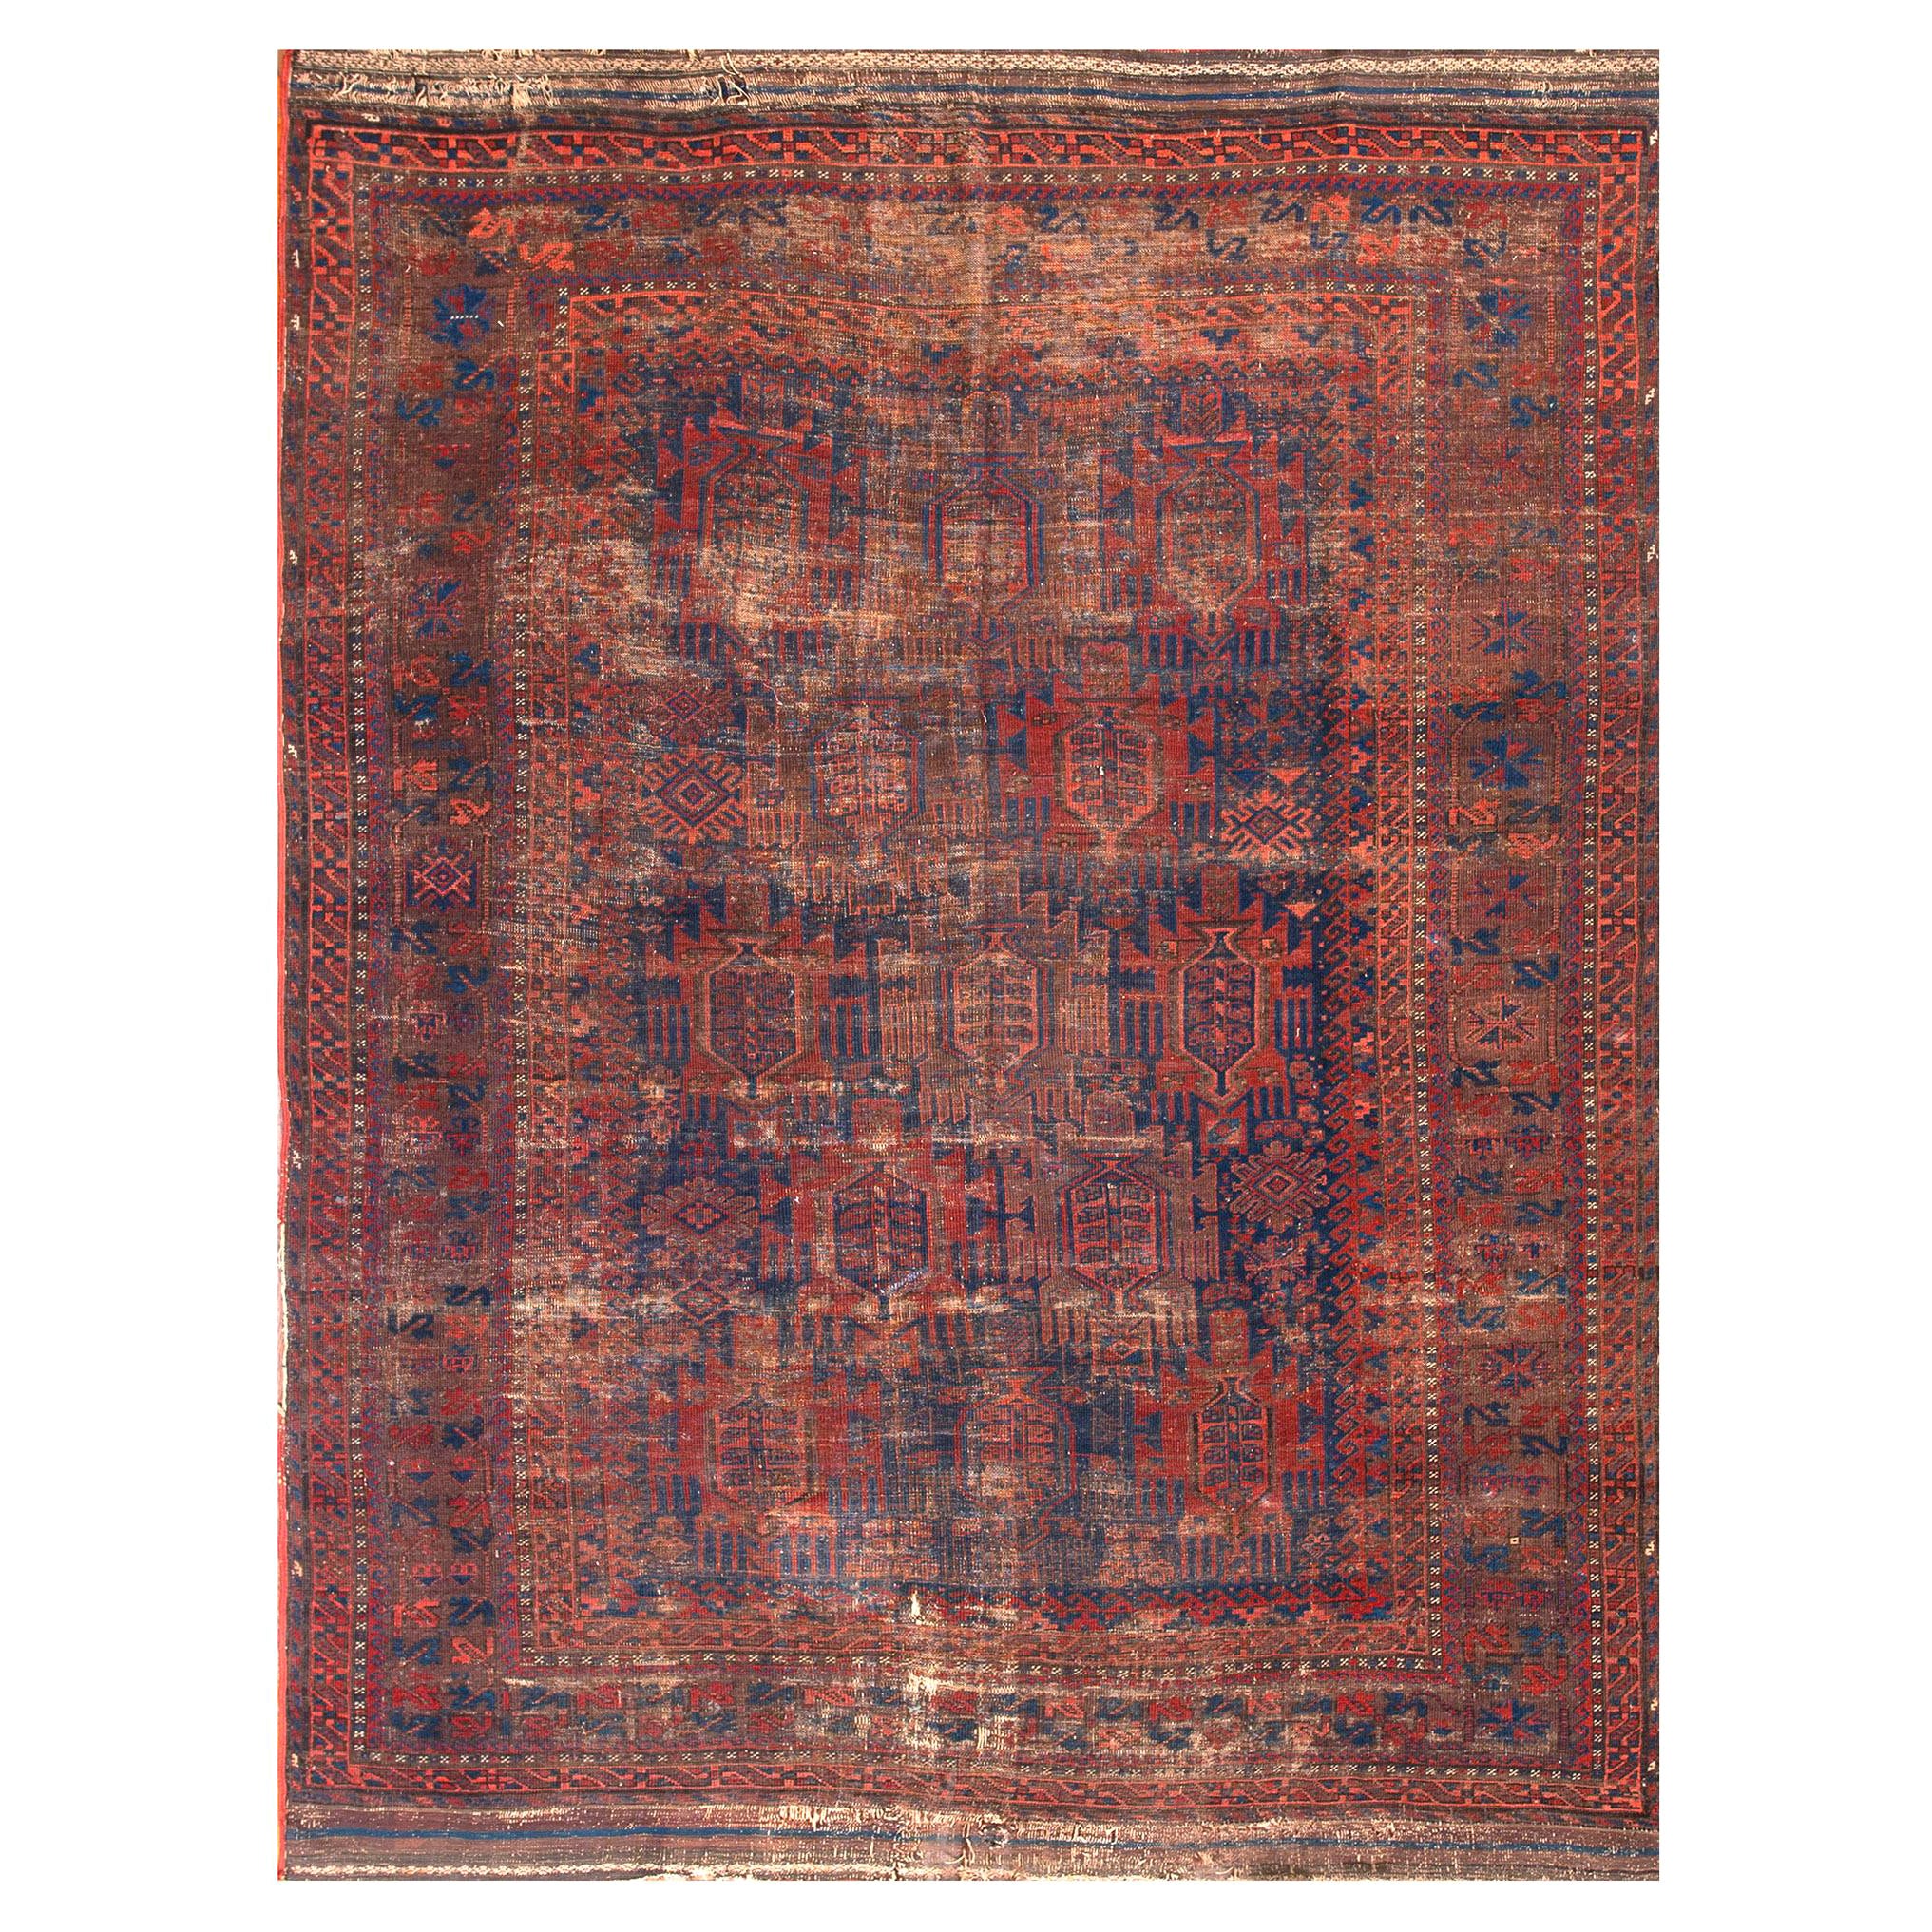 Late 19th Century Persian Baluch Carpet ( 6' x 8'4"- 182 x 254 cm )